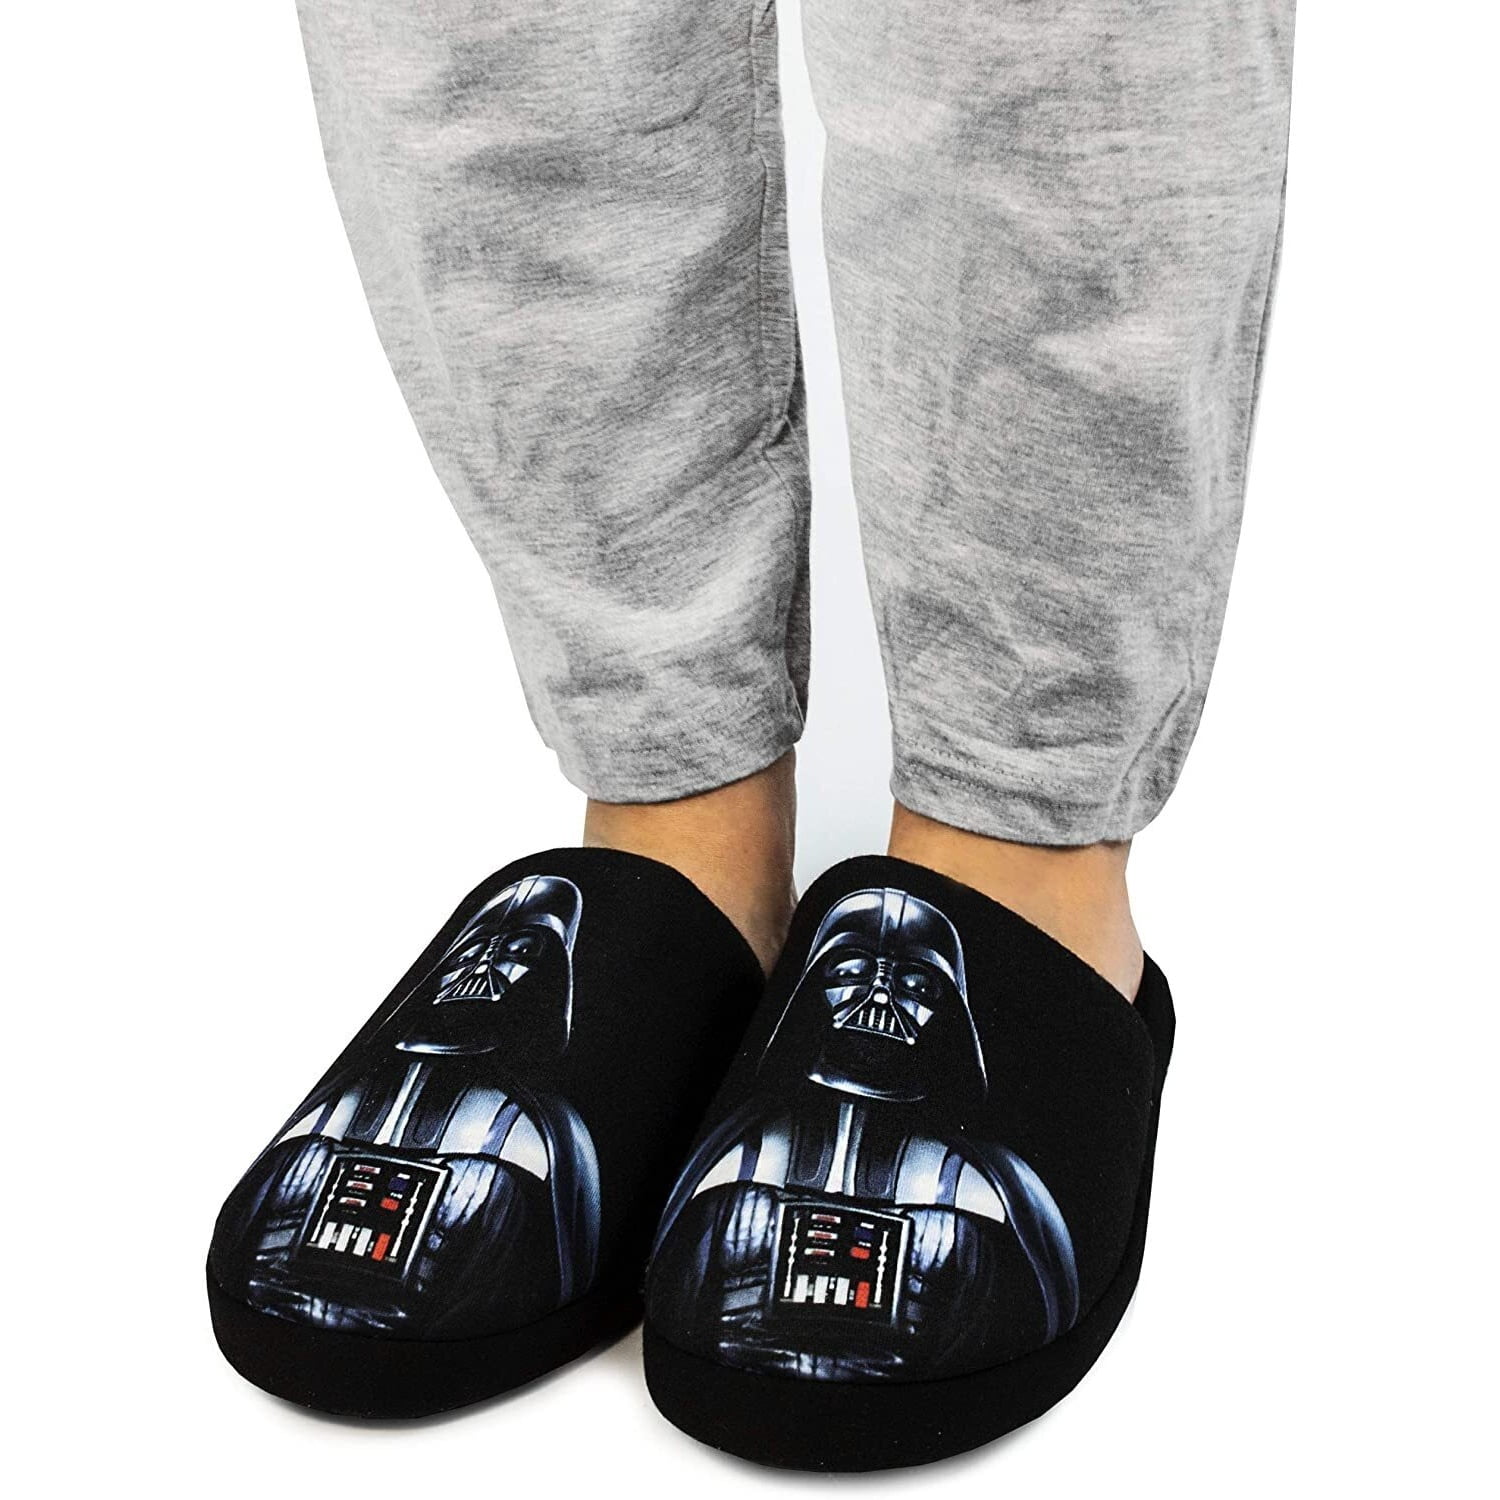 28cm Star Wars Master Yoda Adult Slippers Darth Vader Winter Warm Home Shoes Men 